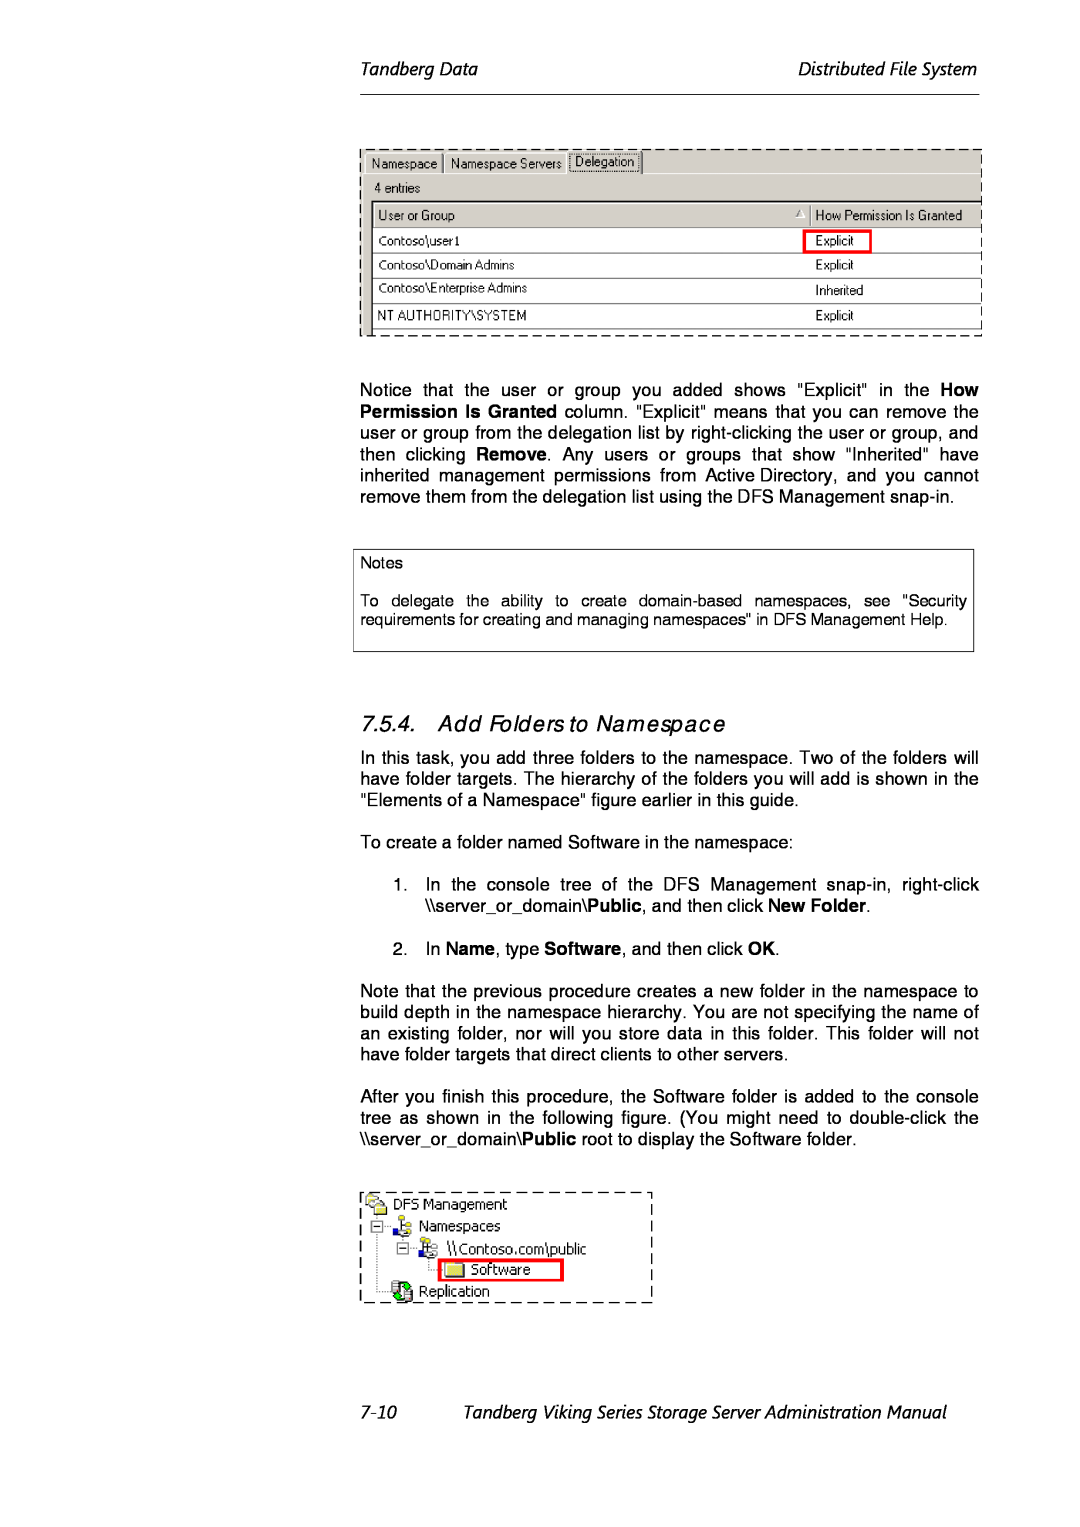 Tandberg Data Viking FS-1500, Viking FS-1600 manual Add Folders to Namespace, Tandberg DataDistributed File System, 7-10 